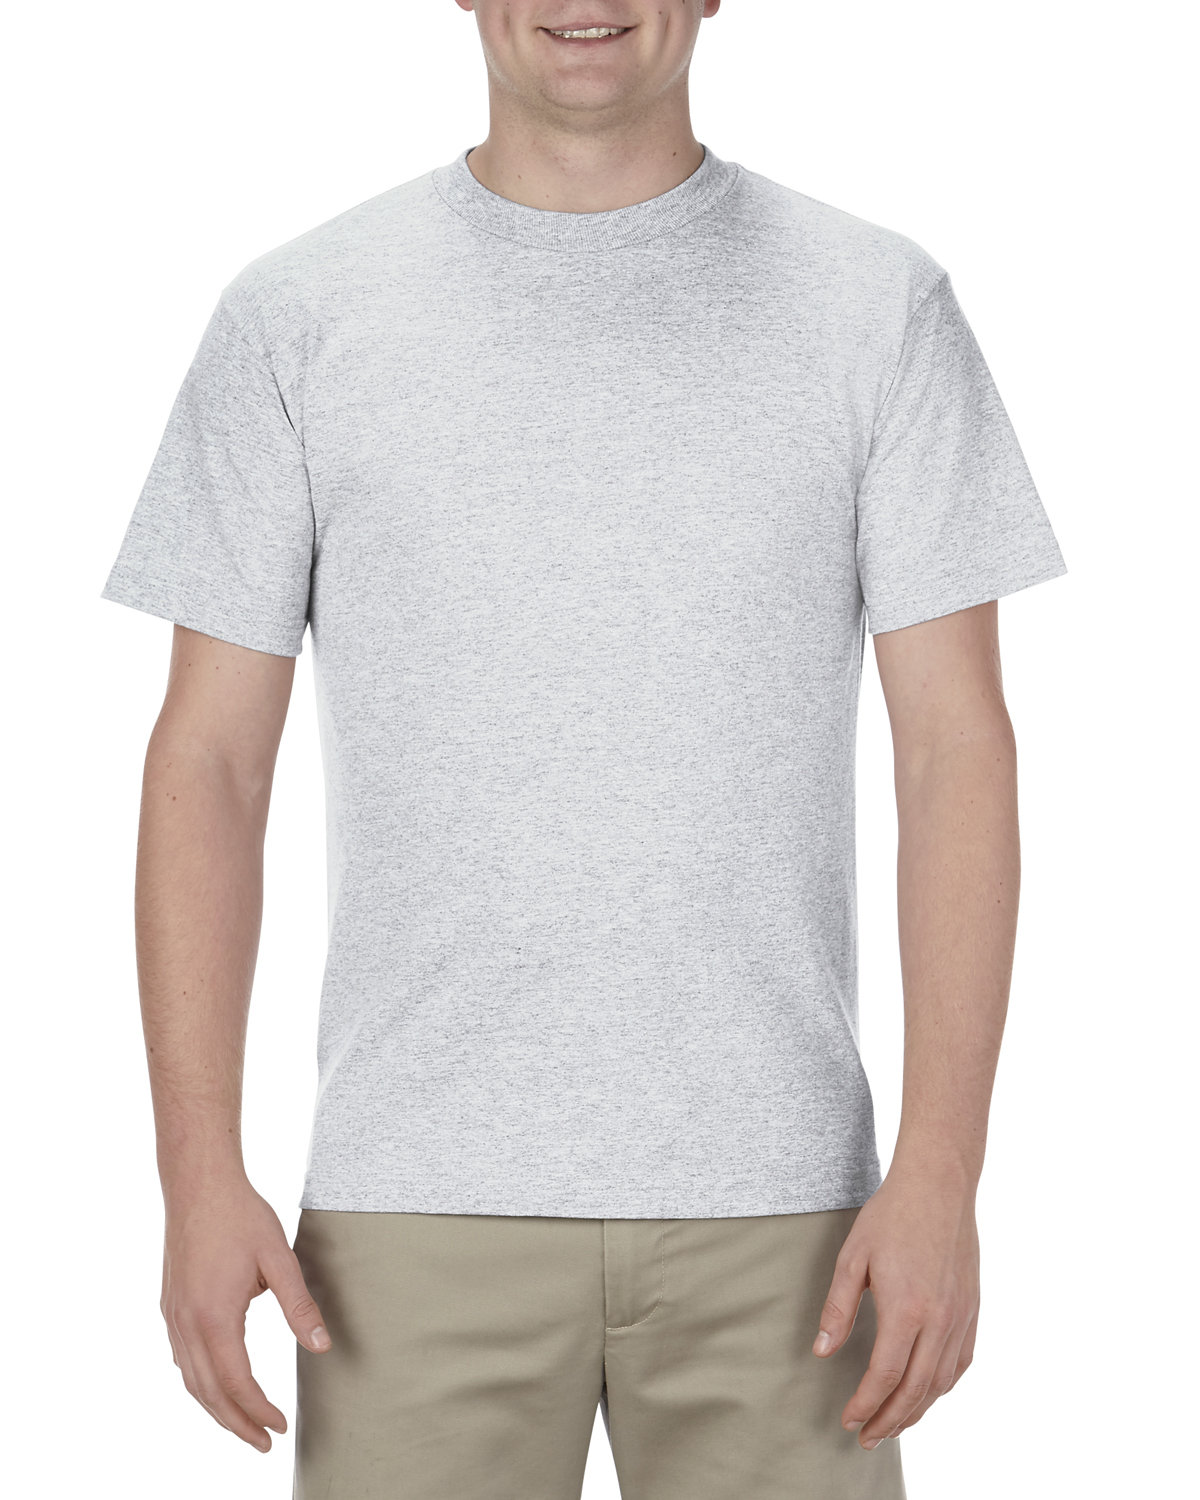 American Apparel Adult 6.0 oz., 100% Cotton T-Shirt ASH GREY 